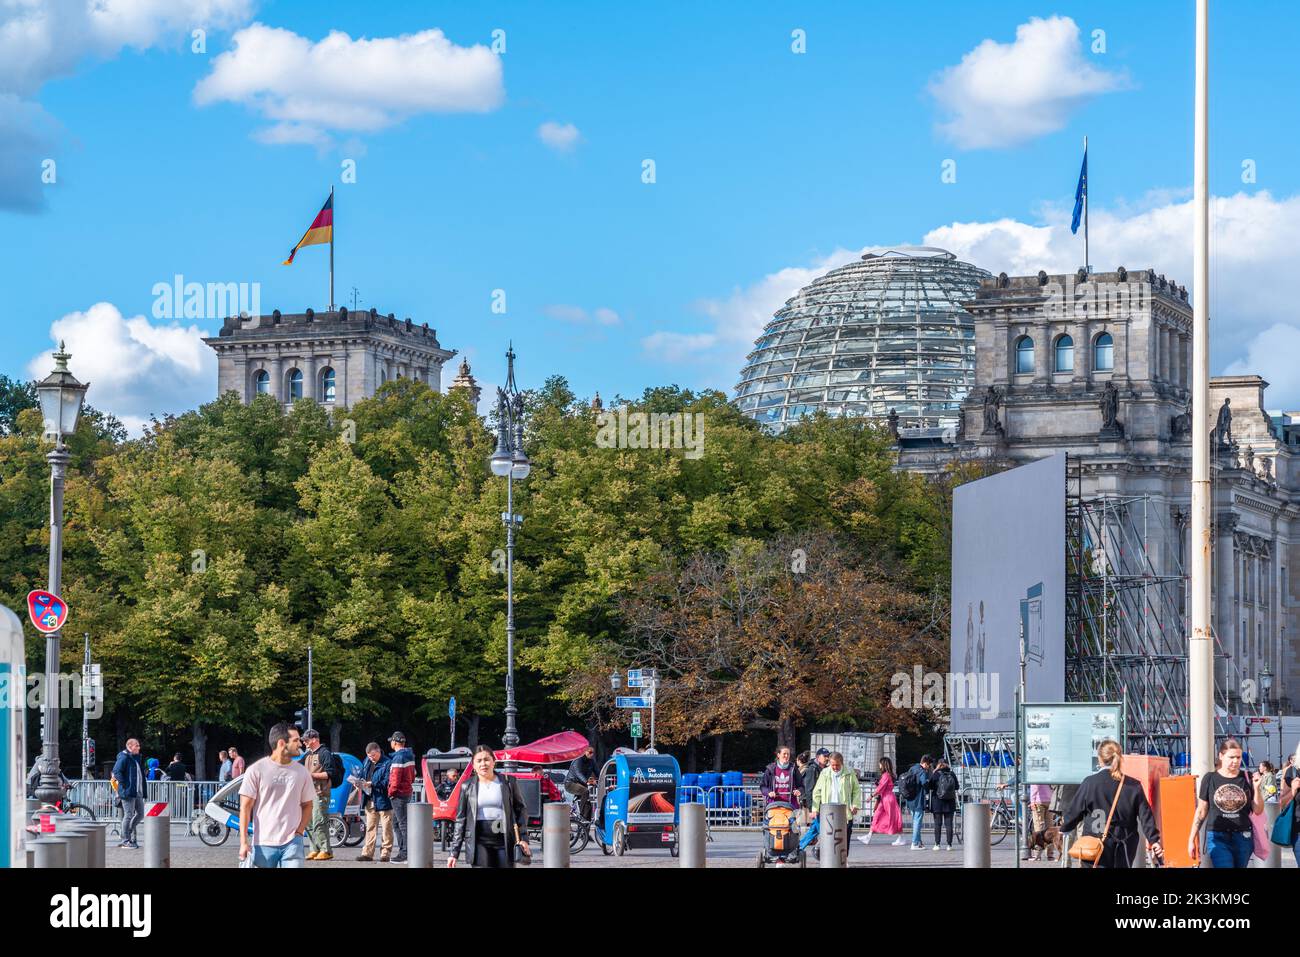 Platz des 18. März view to the German Reichstag building, Berlin, Germany, Europe Stock Photo